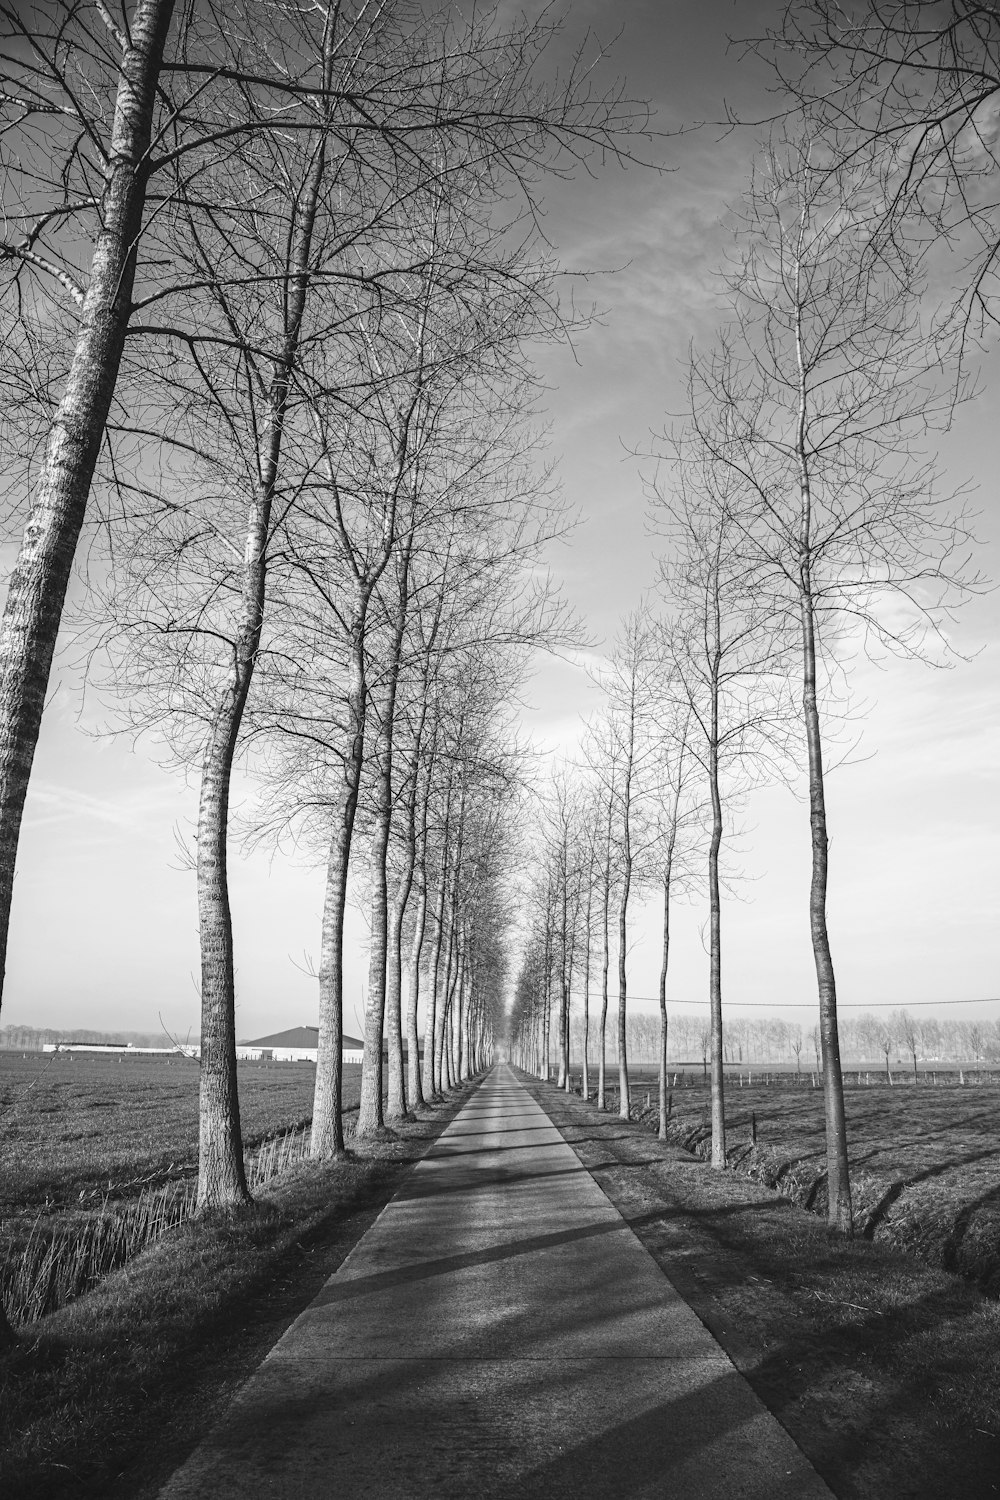 road between bare trees